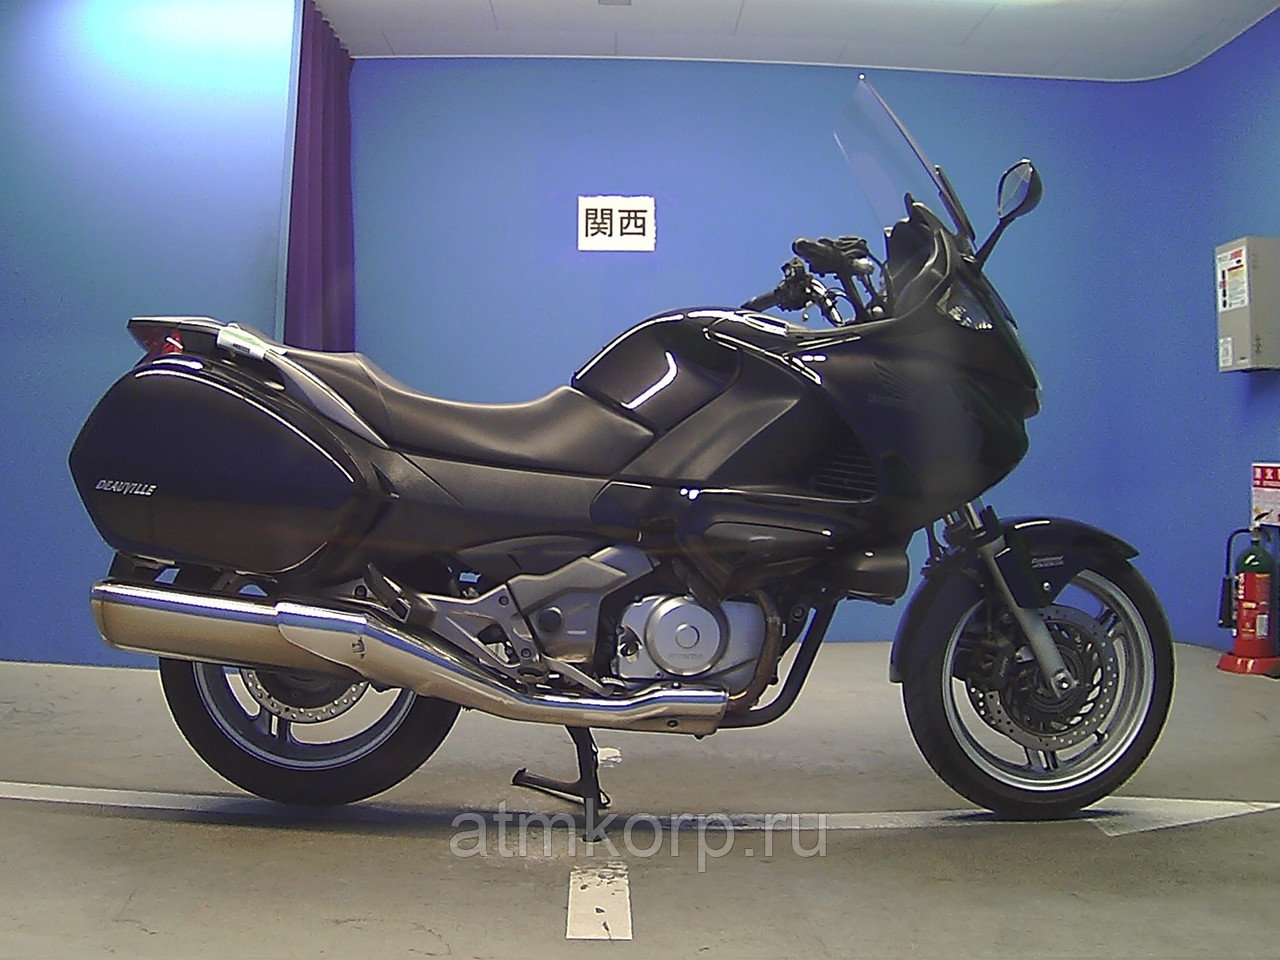 Мотоцикл хонда nt 700v deauville: технические характеристики байка